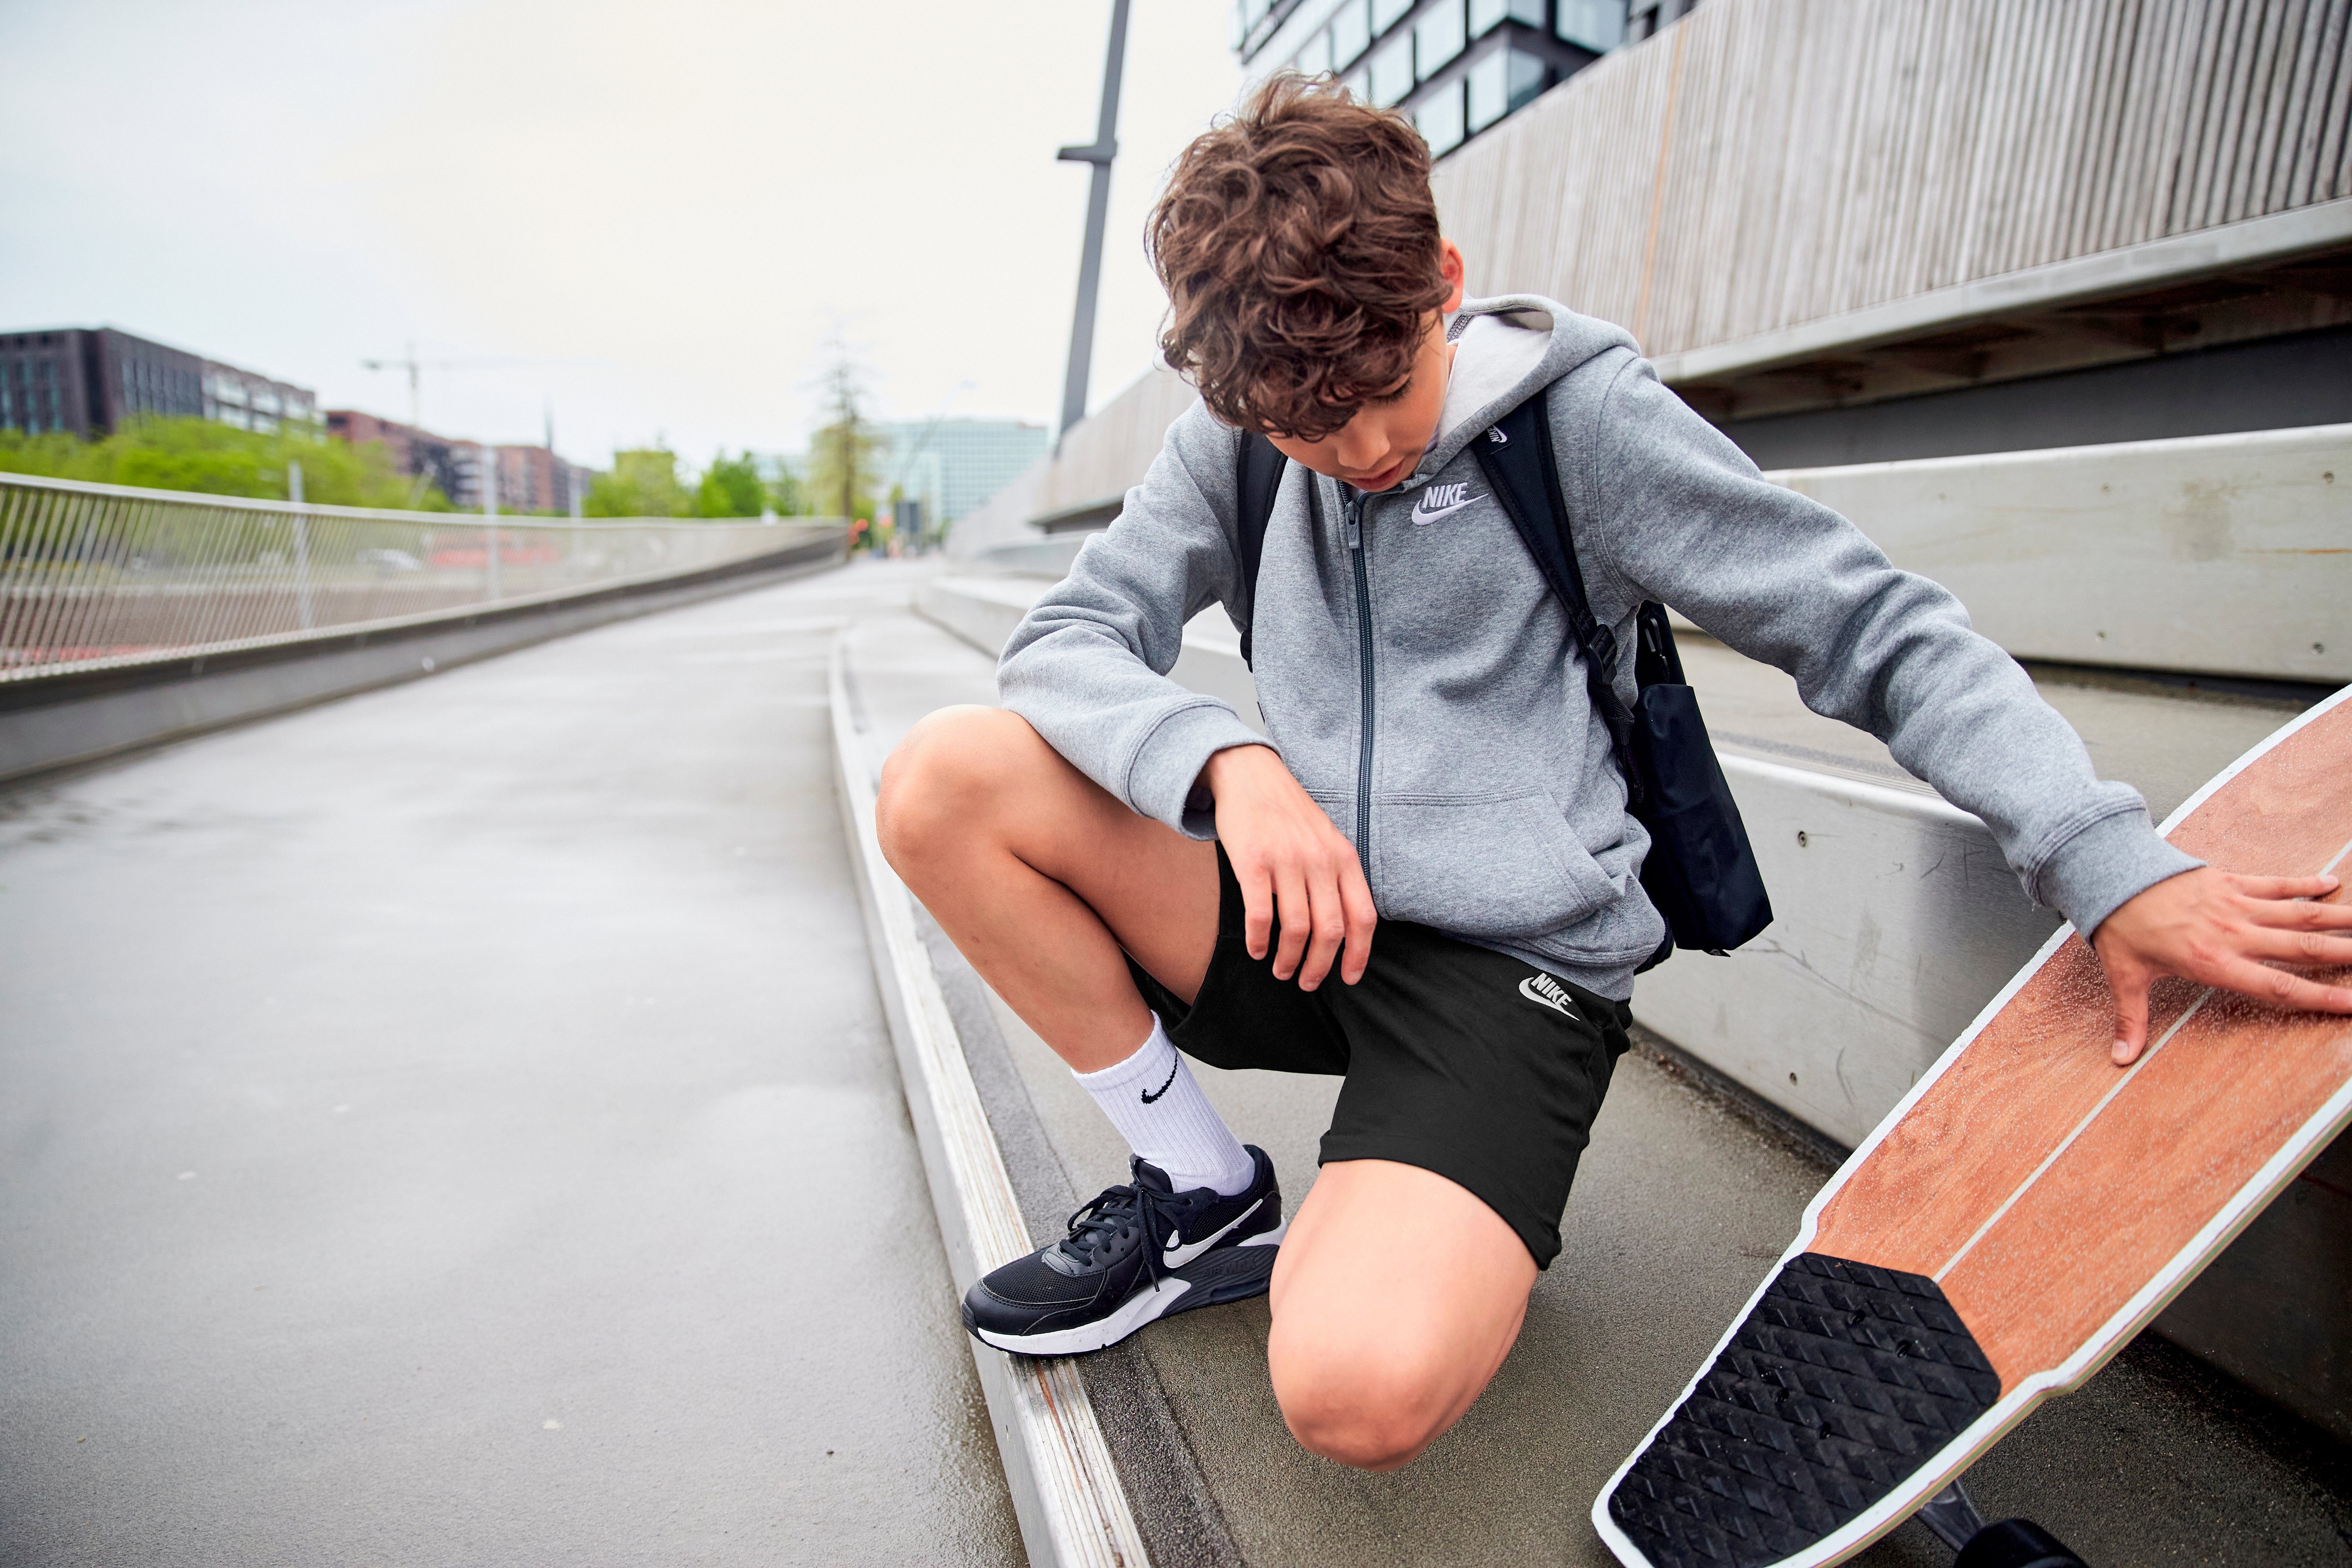 Nike Sportswear Shorts BIG SHORTS (BOYS) JERSEY schwarz KIDS'